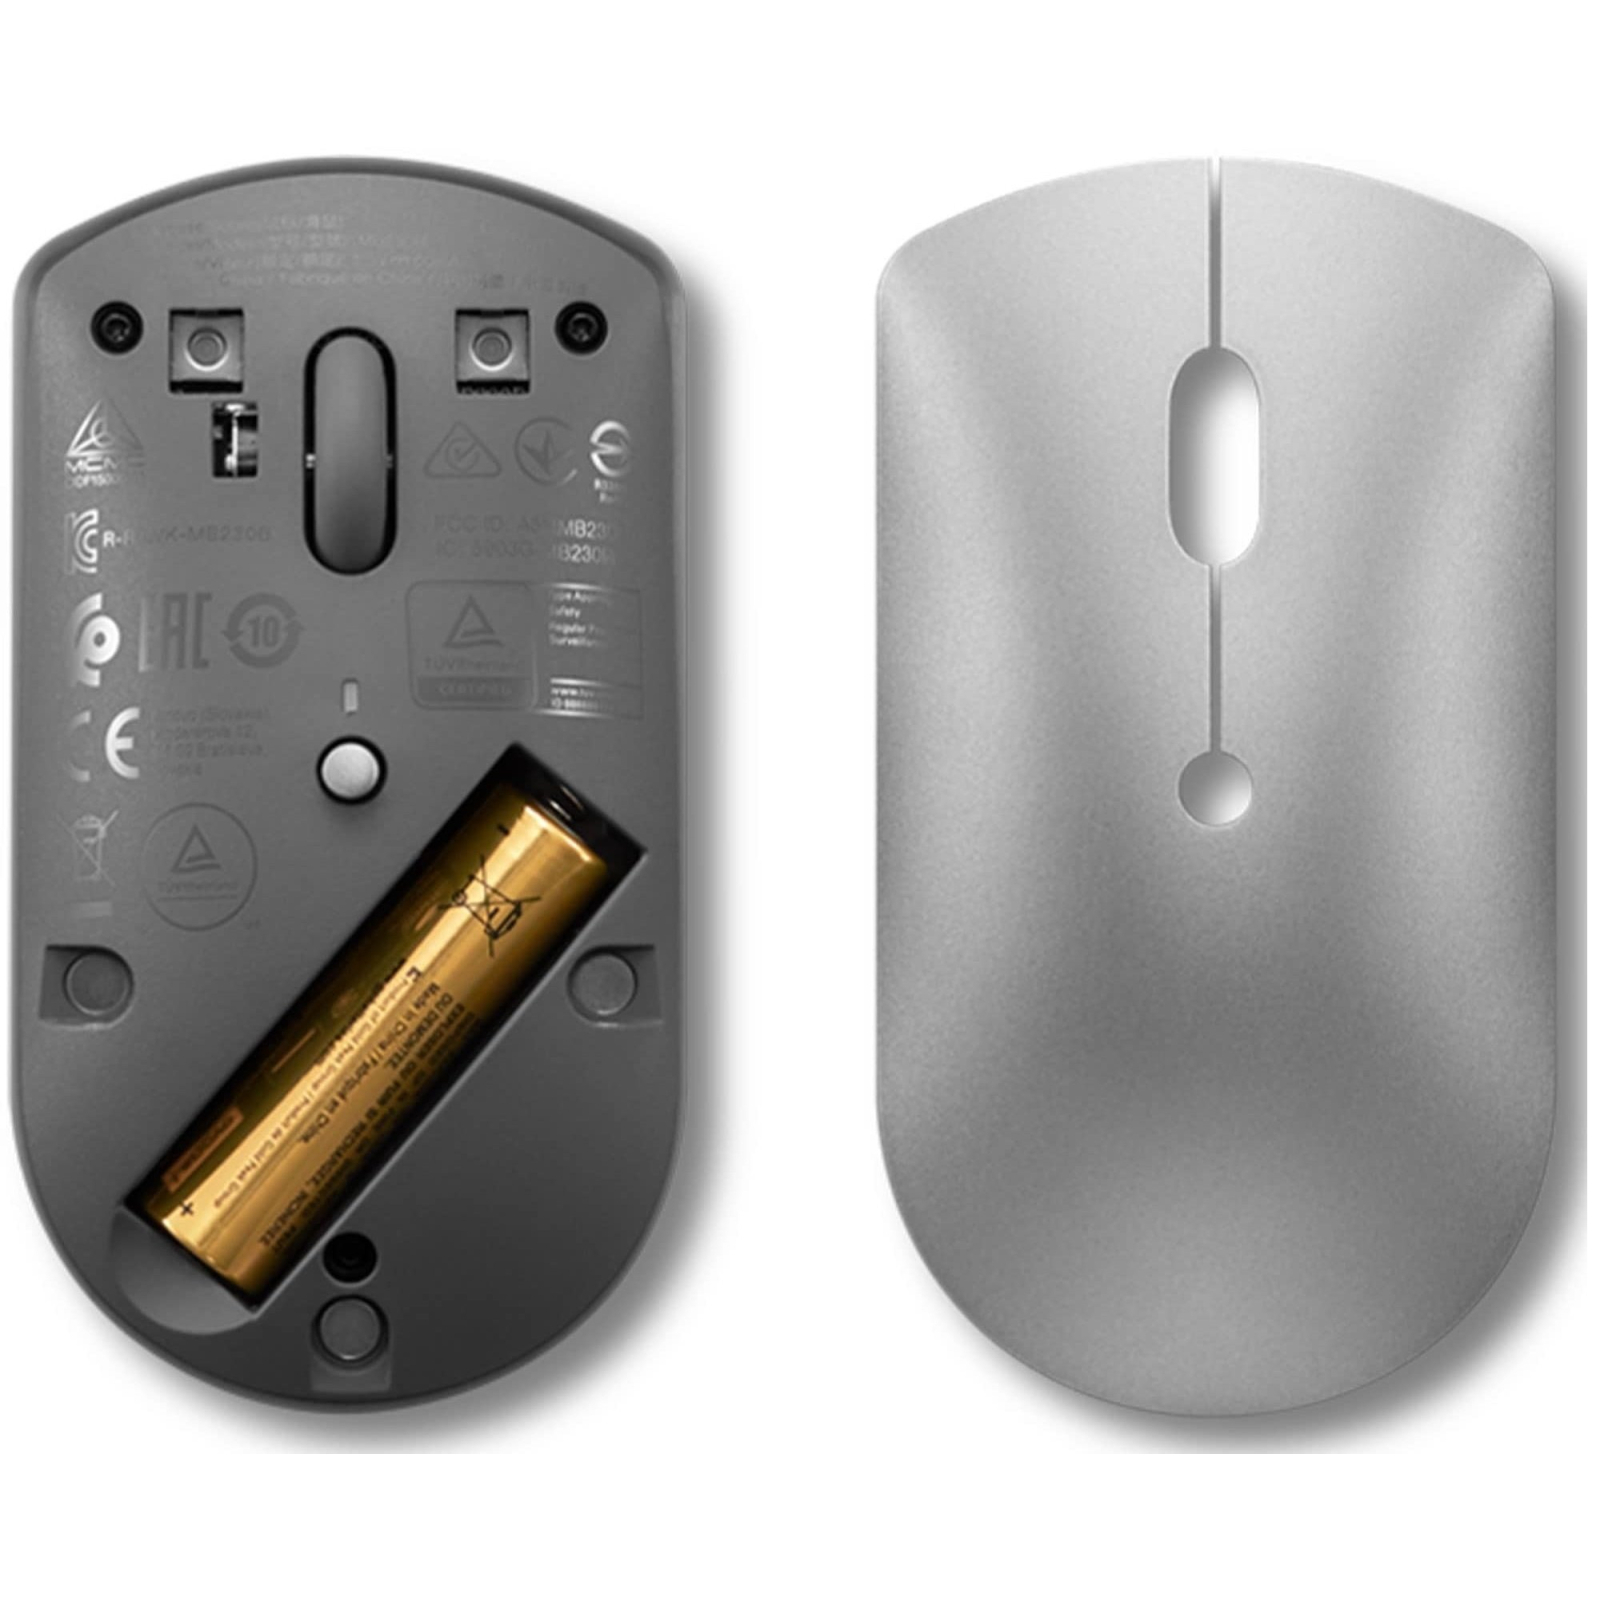 Мышка Lenovo 600 Bluetooth Silent Mouse (GY50X88832) изображение 4